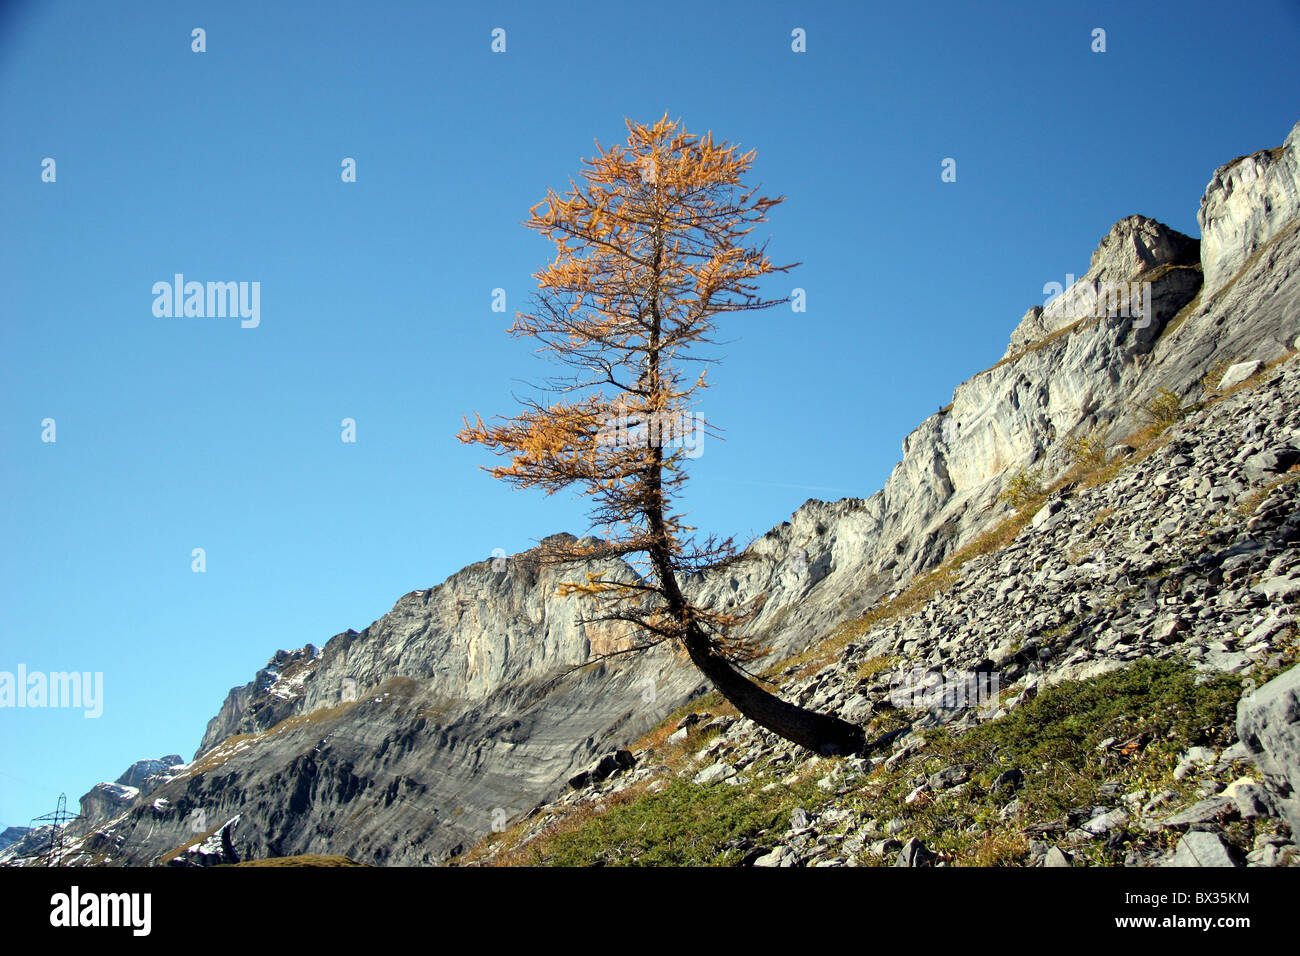 Switzerland Europe Bernese Oberland Sunnbuel near Kandersteg mountains Alps tree bald scanty larch crookedl Stock Photo